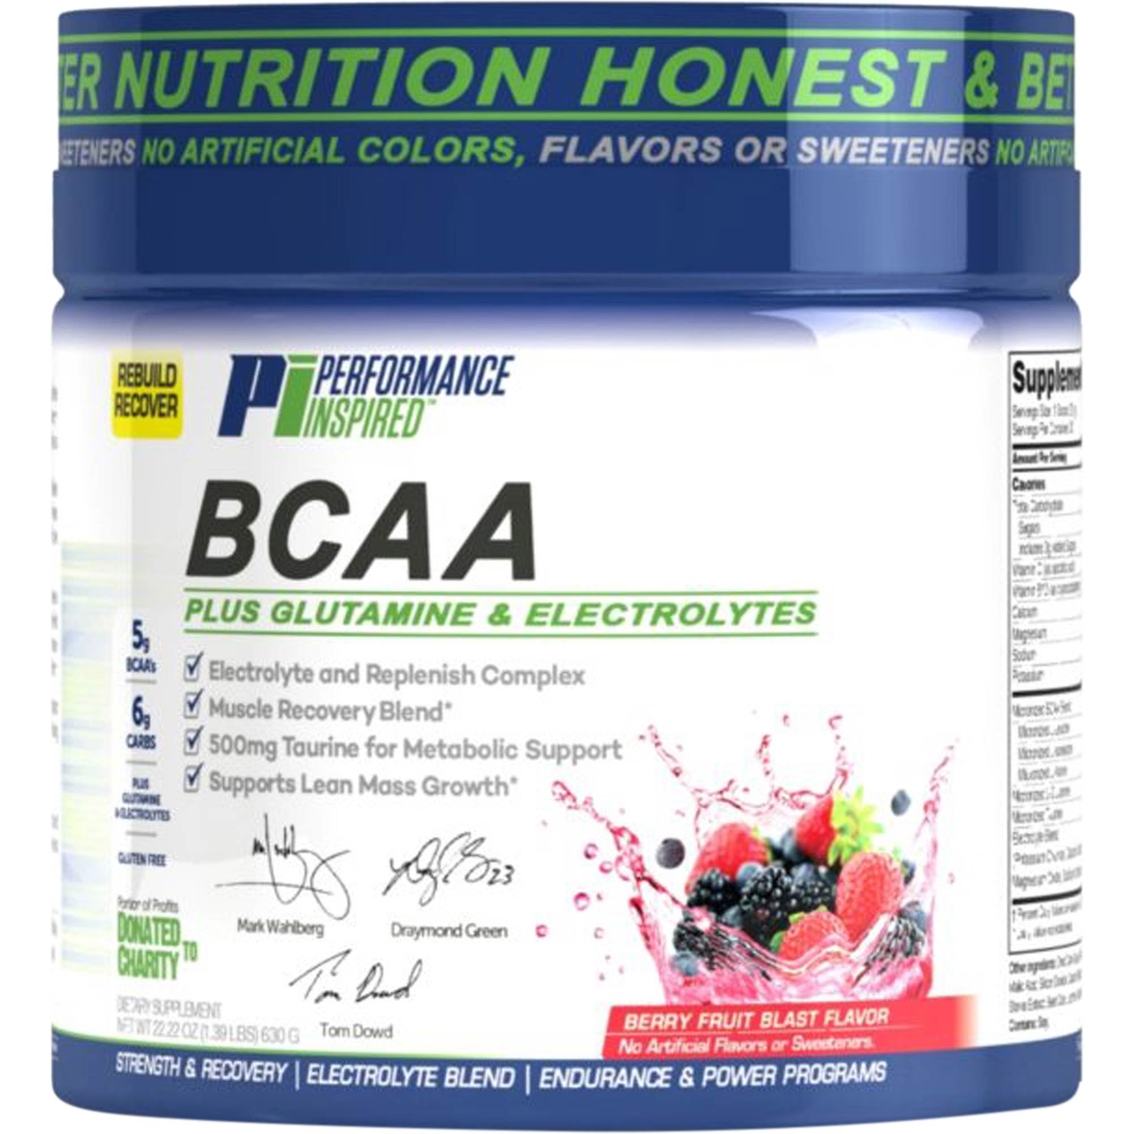 Performance Inspired Post Workout BCAA Plus Glutamine & Electrolytes Powder - Image 1 of 2